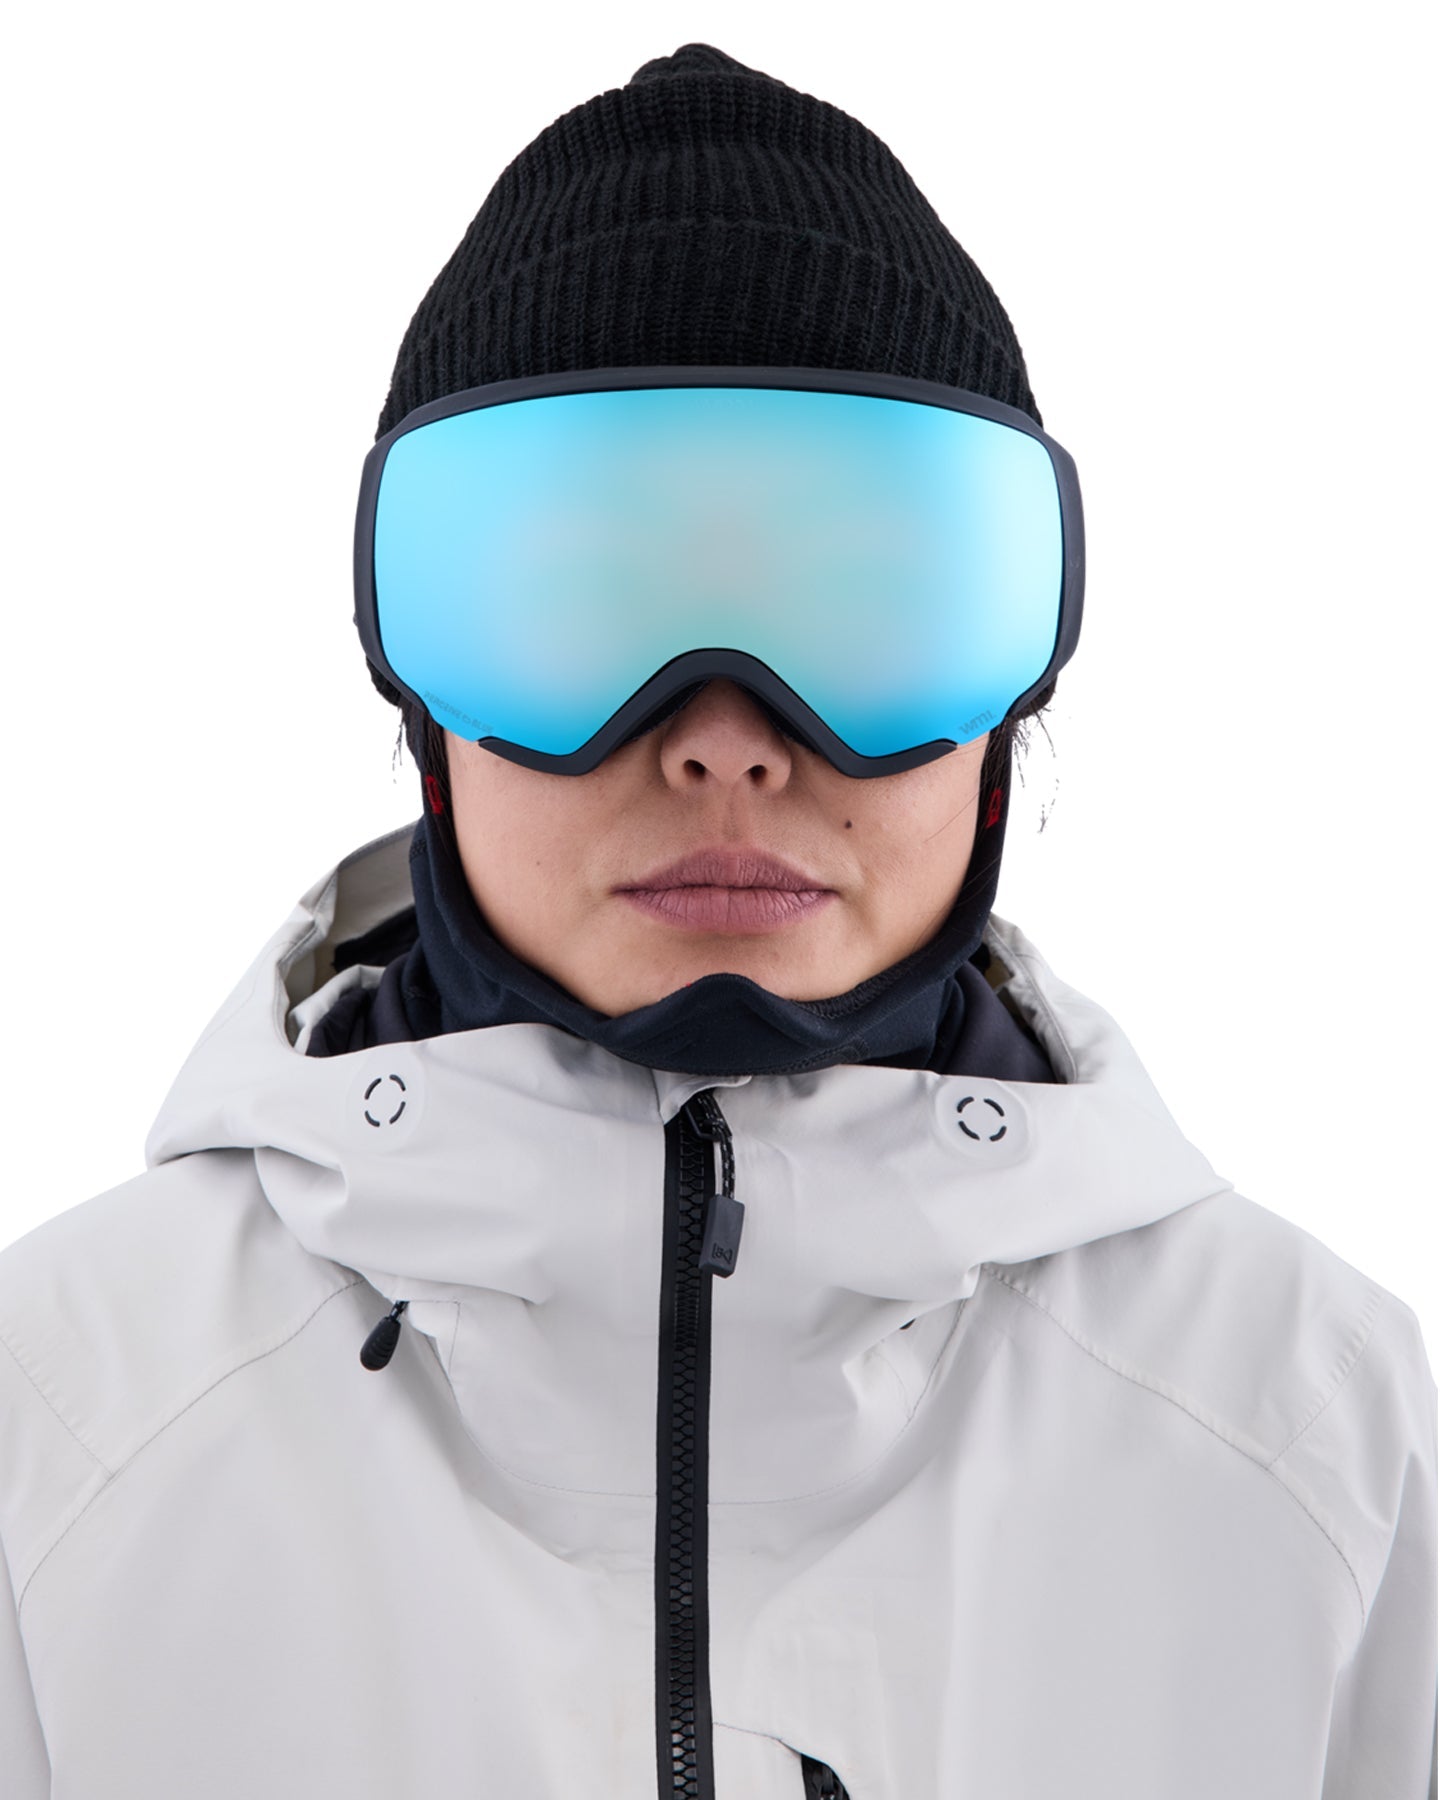 Anon WM1 Snow Goggles + Bonus Lens + MFI - Black / Perceive Variable Blue Women's Snow Goggles - Trojan Wake Ski Snow